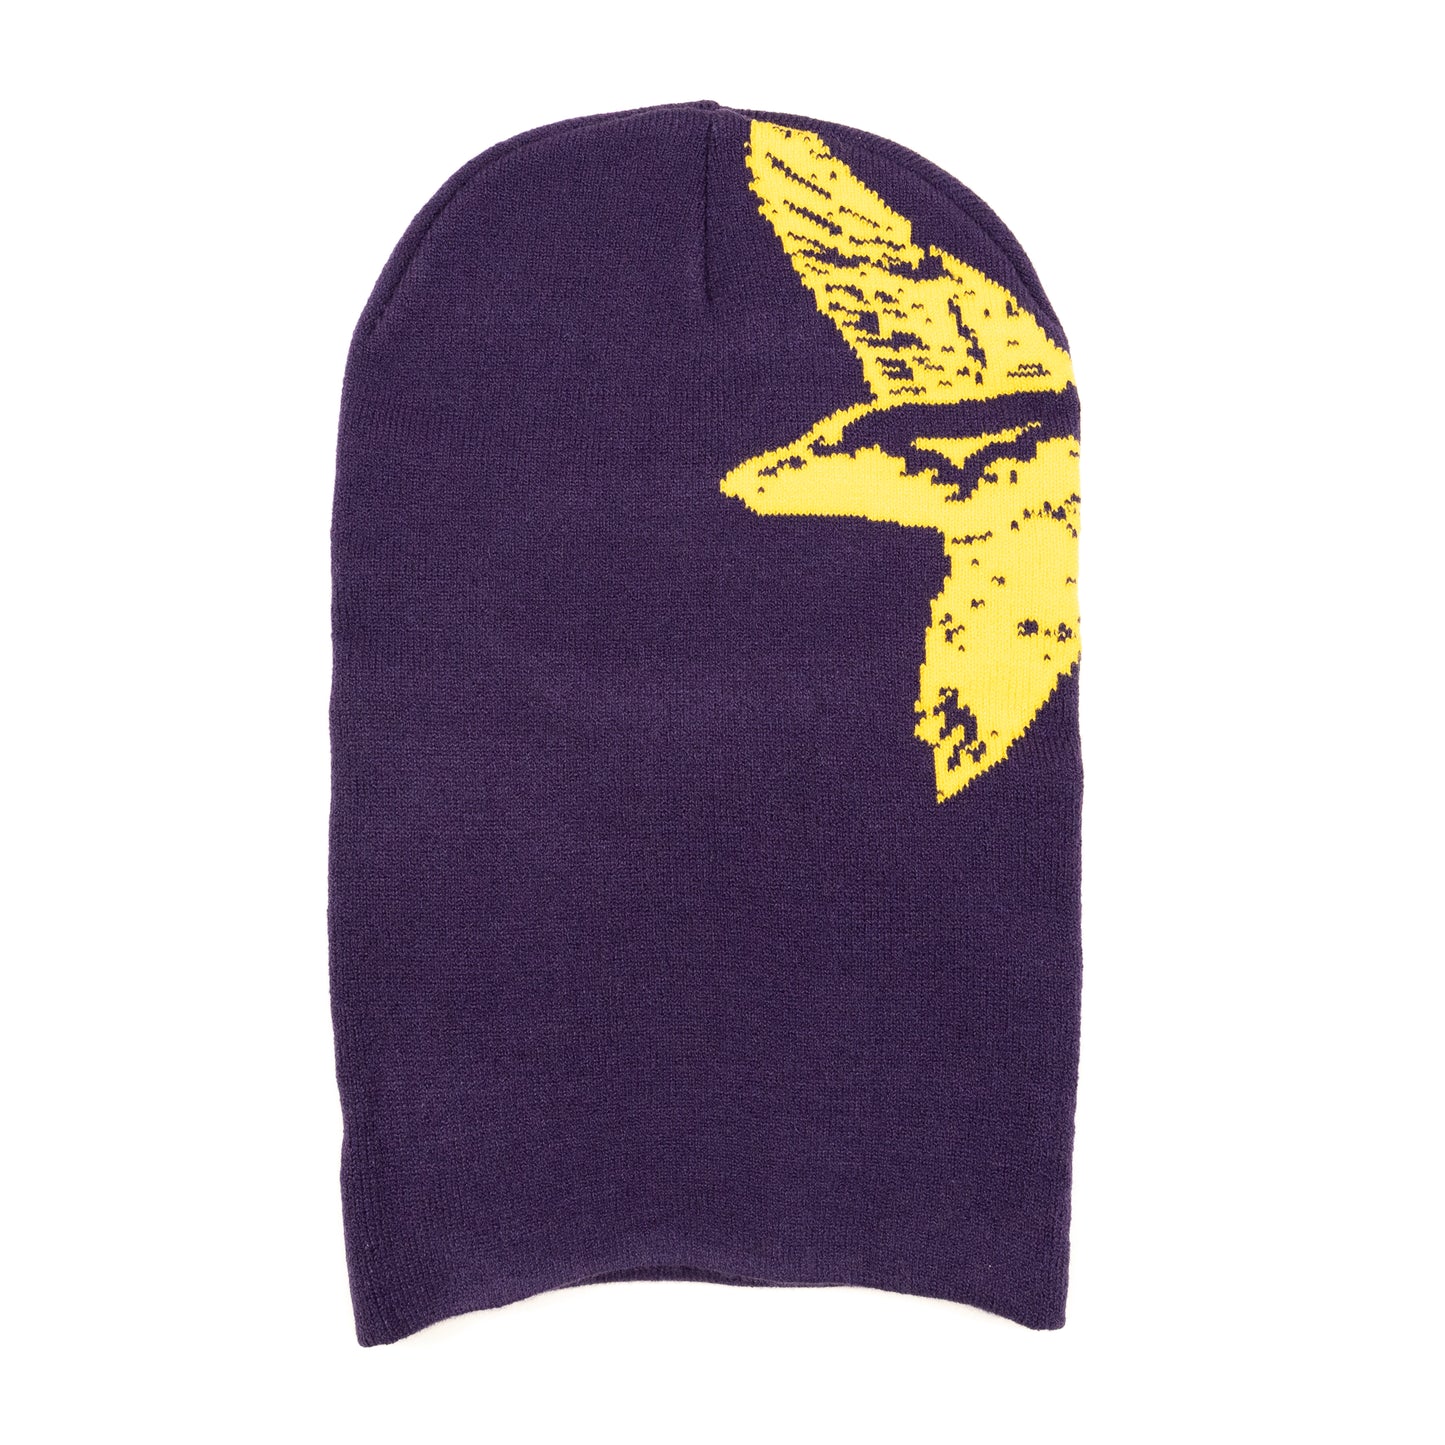 Flying Duck Ski Mask, Purple/Gold